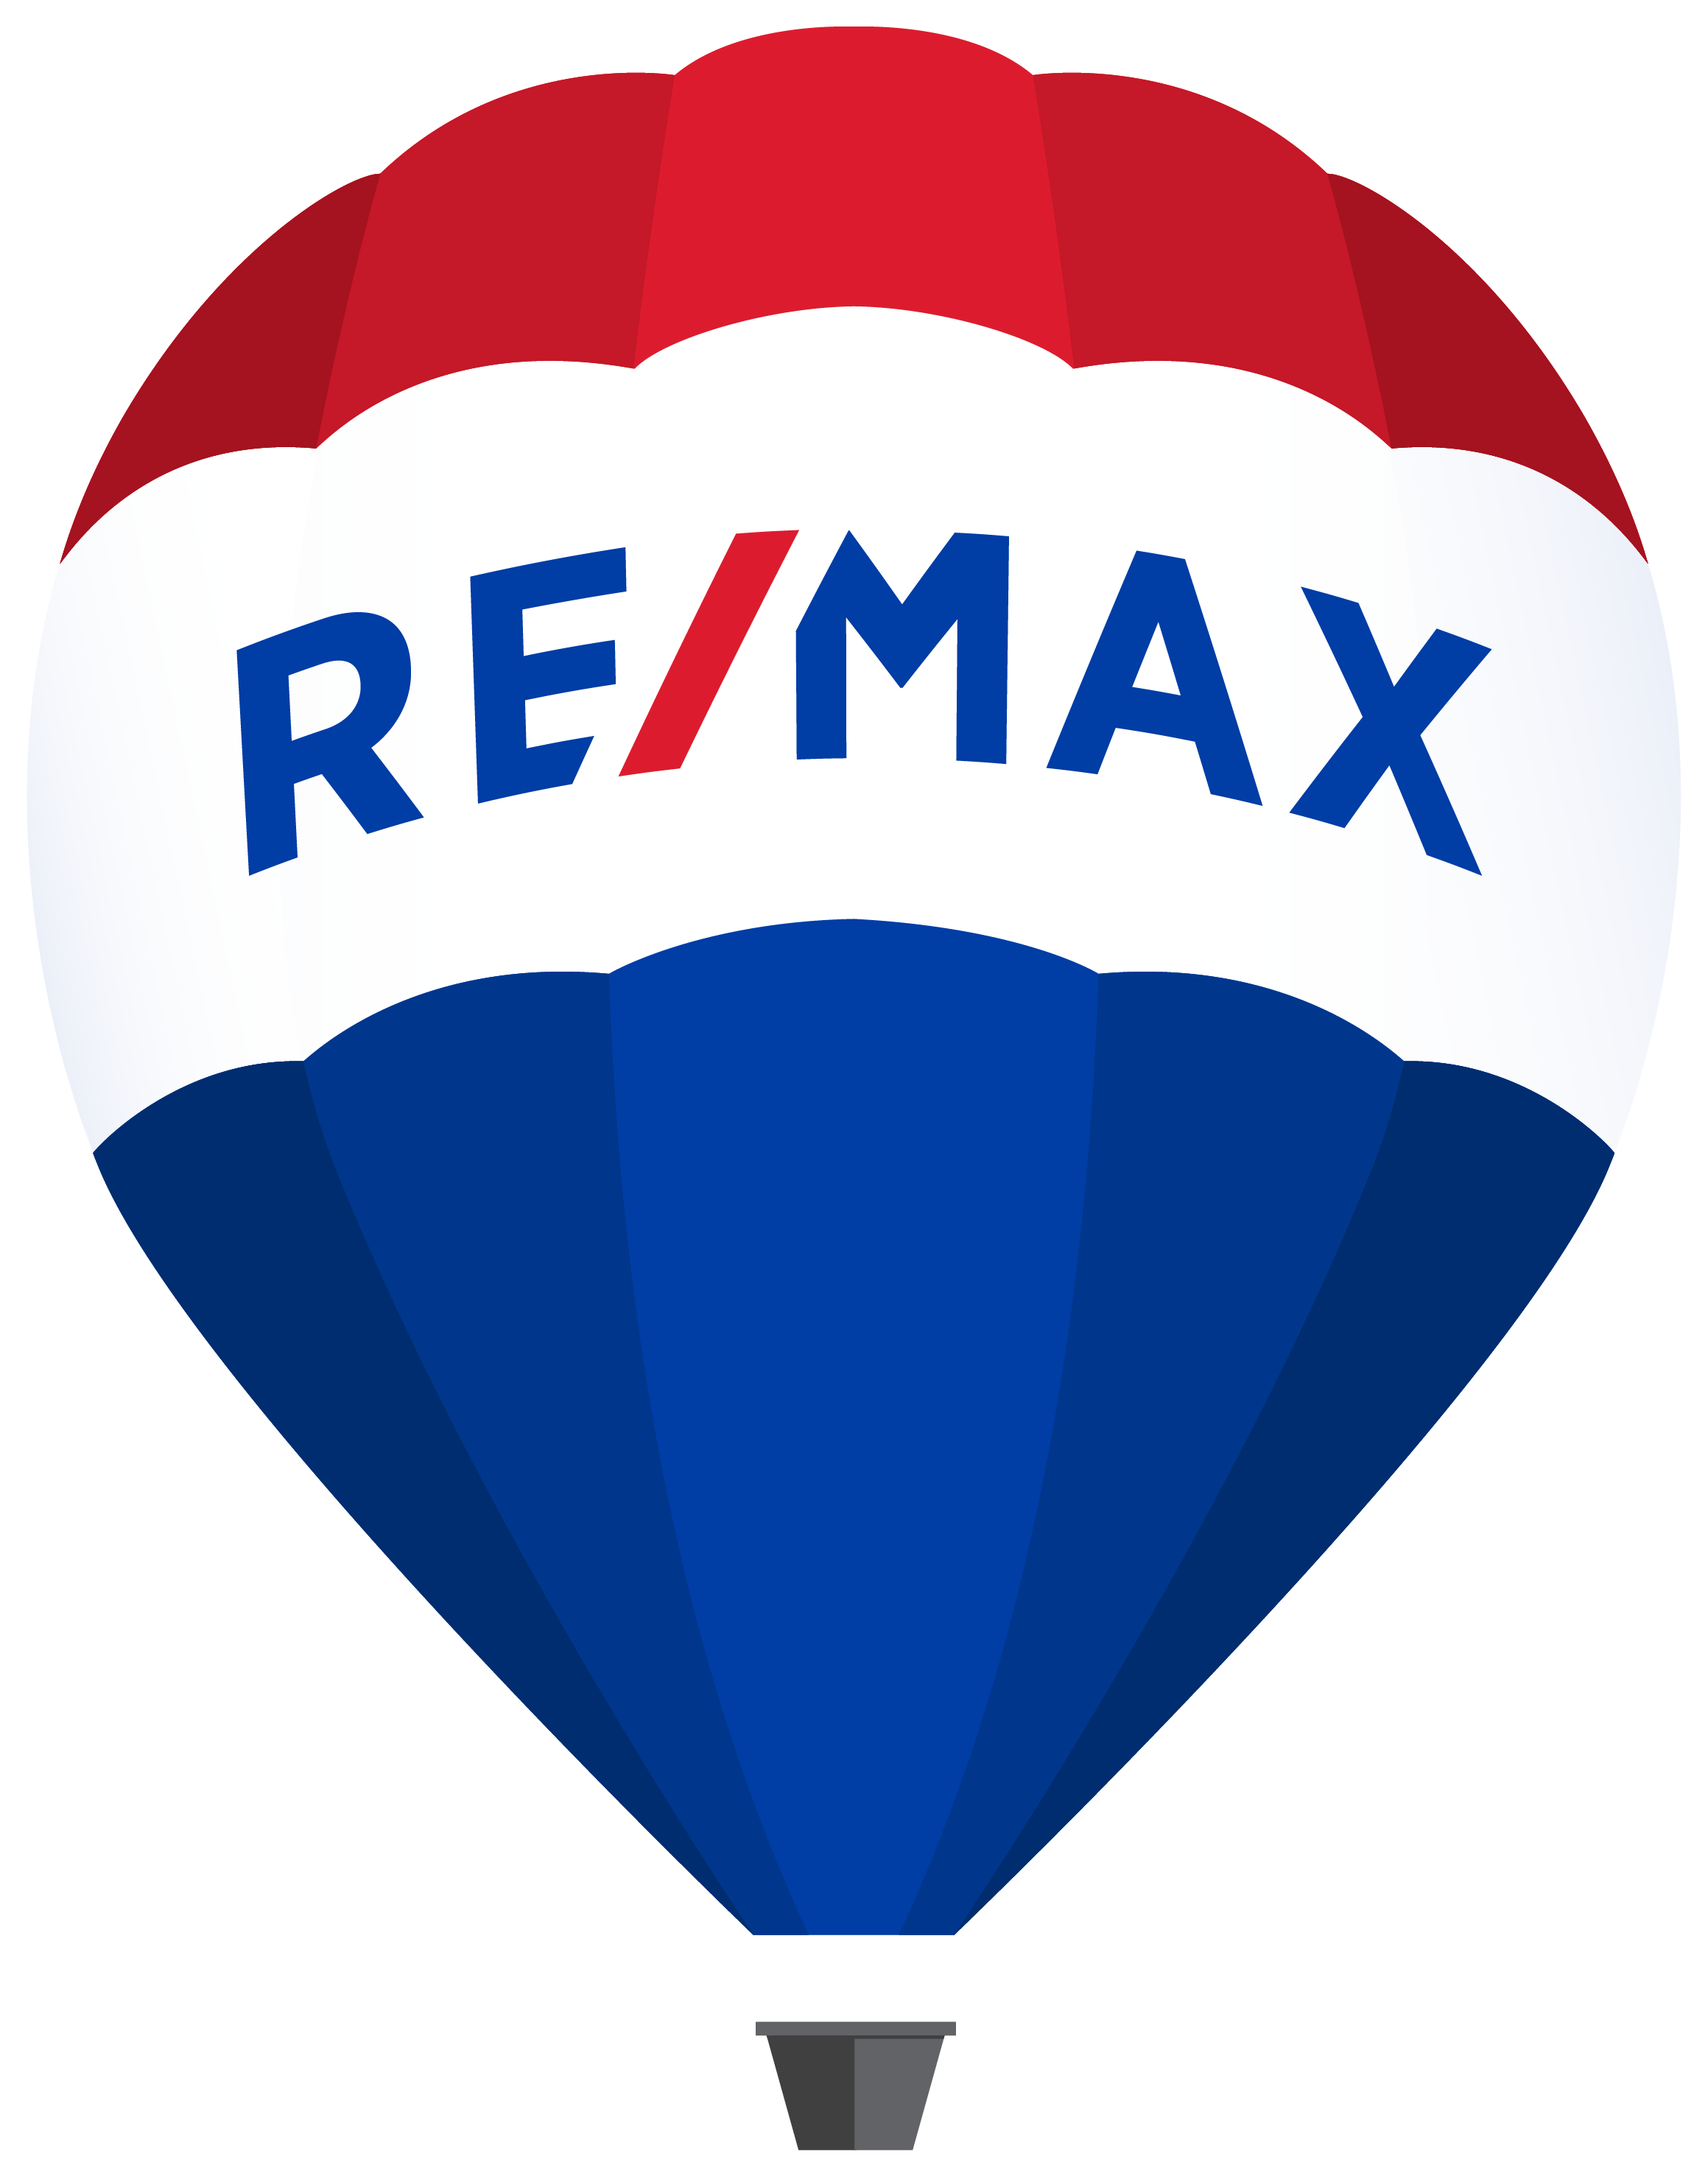 1-REMAX_Balloon_RGB.png